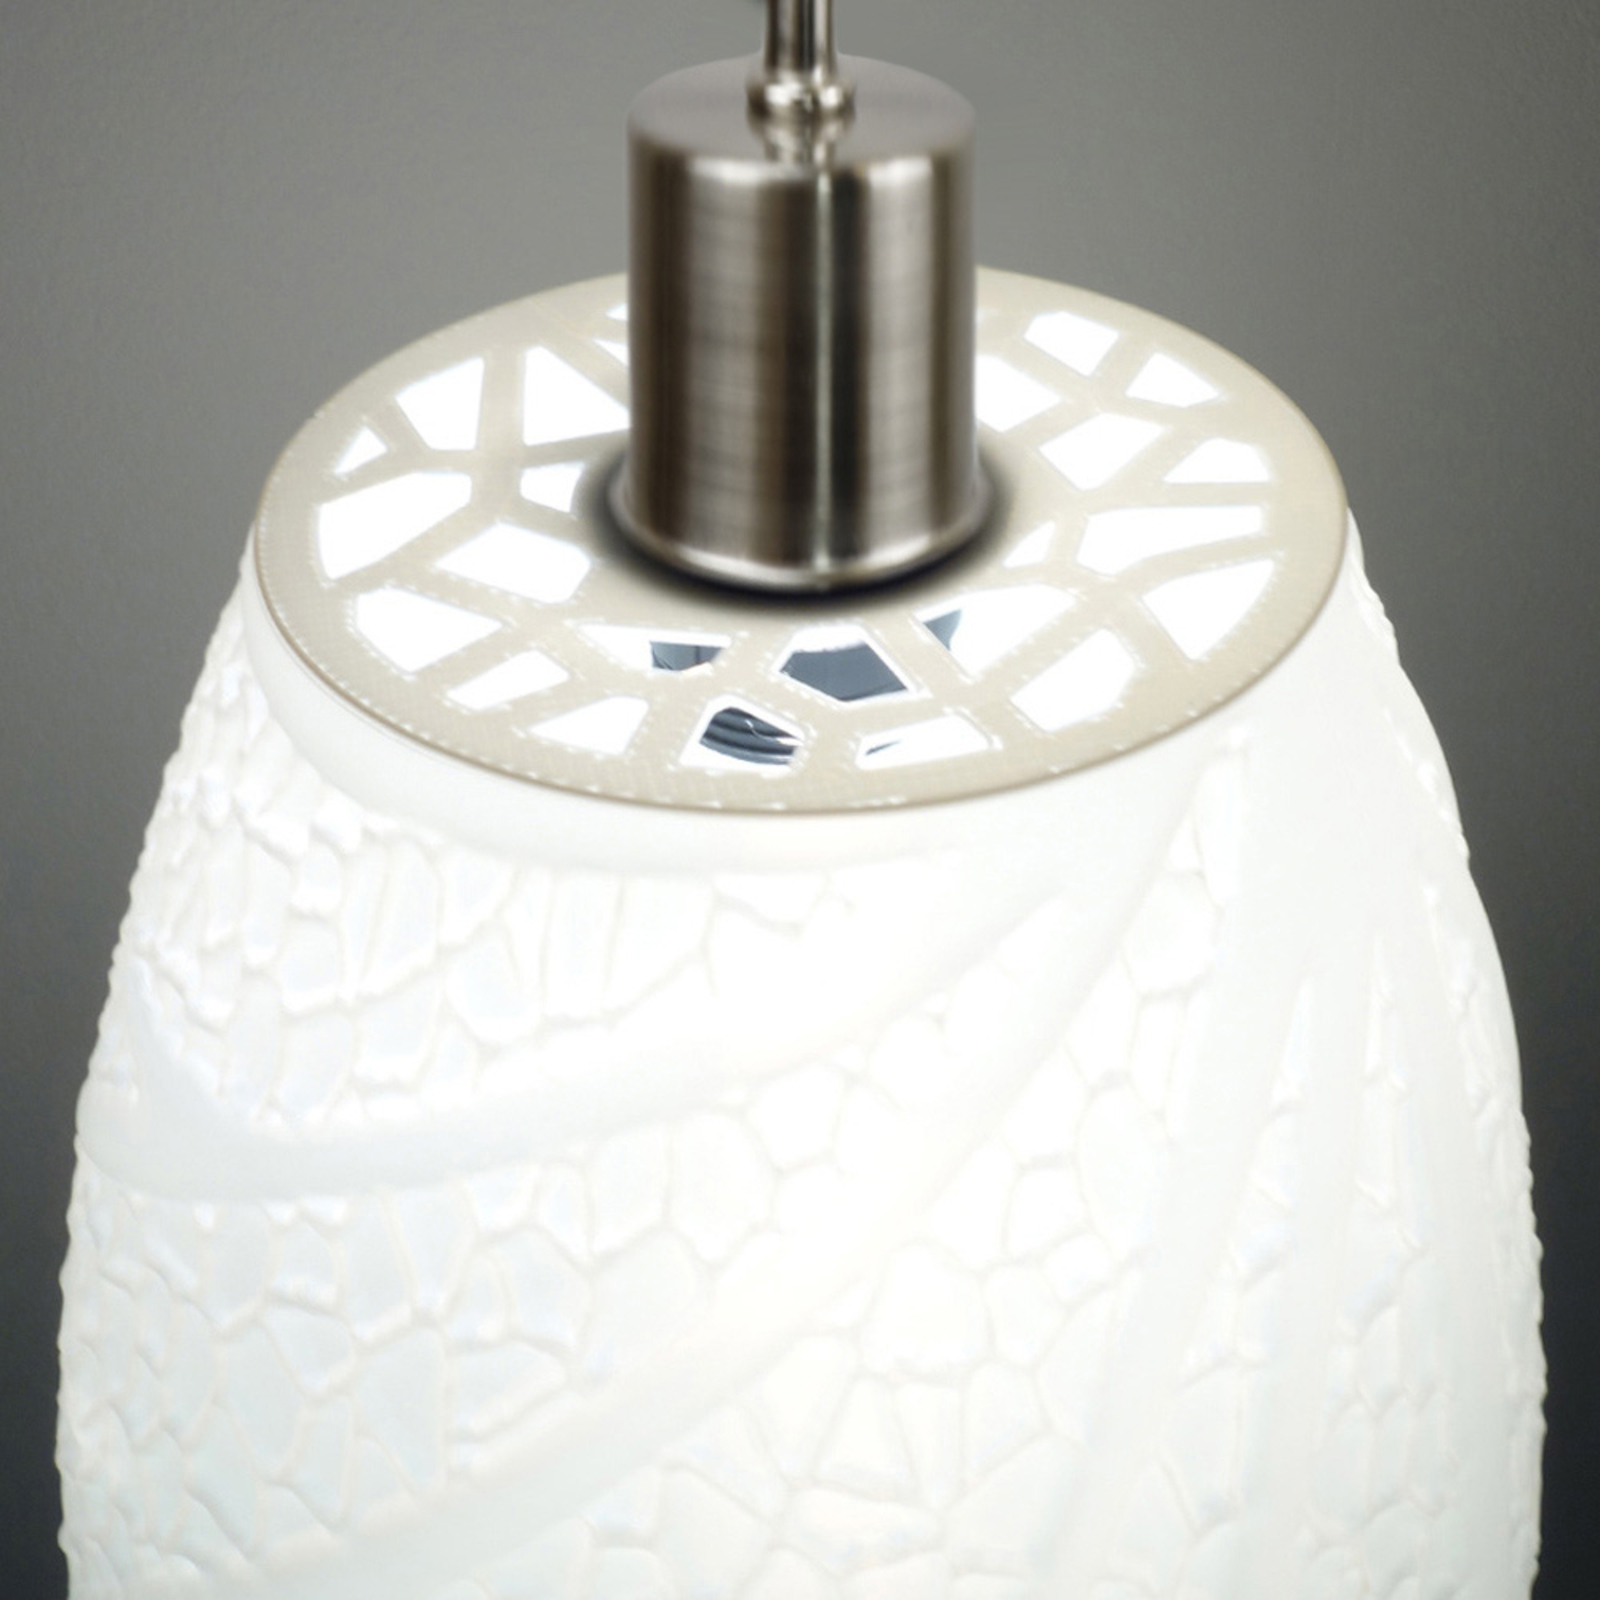 Flora - designer pendant light using 3D print